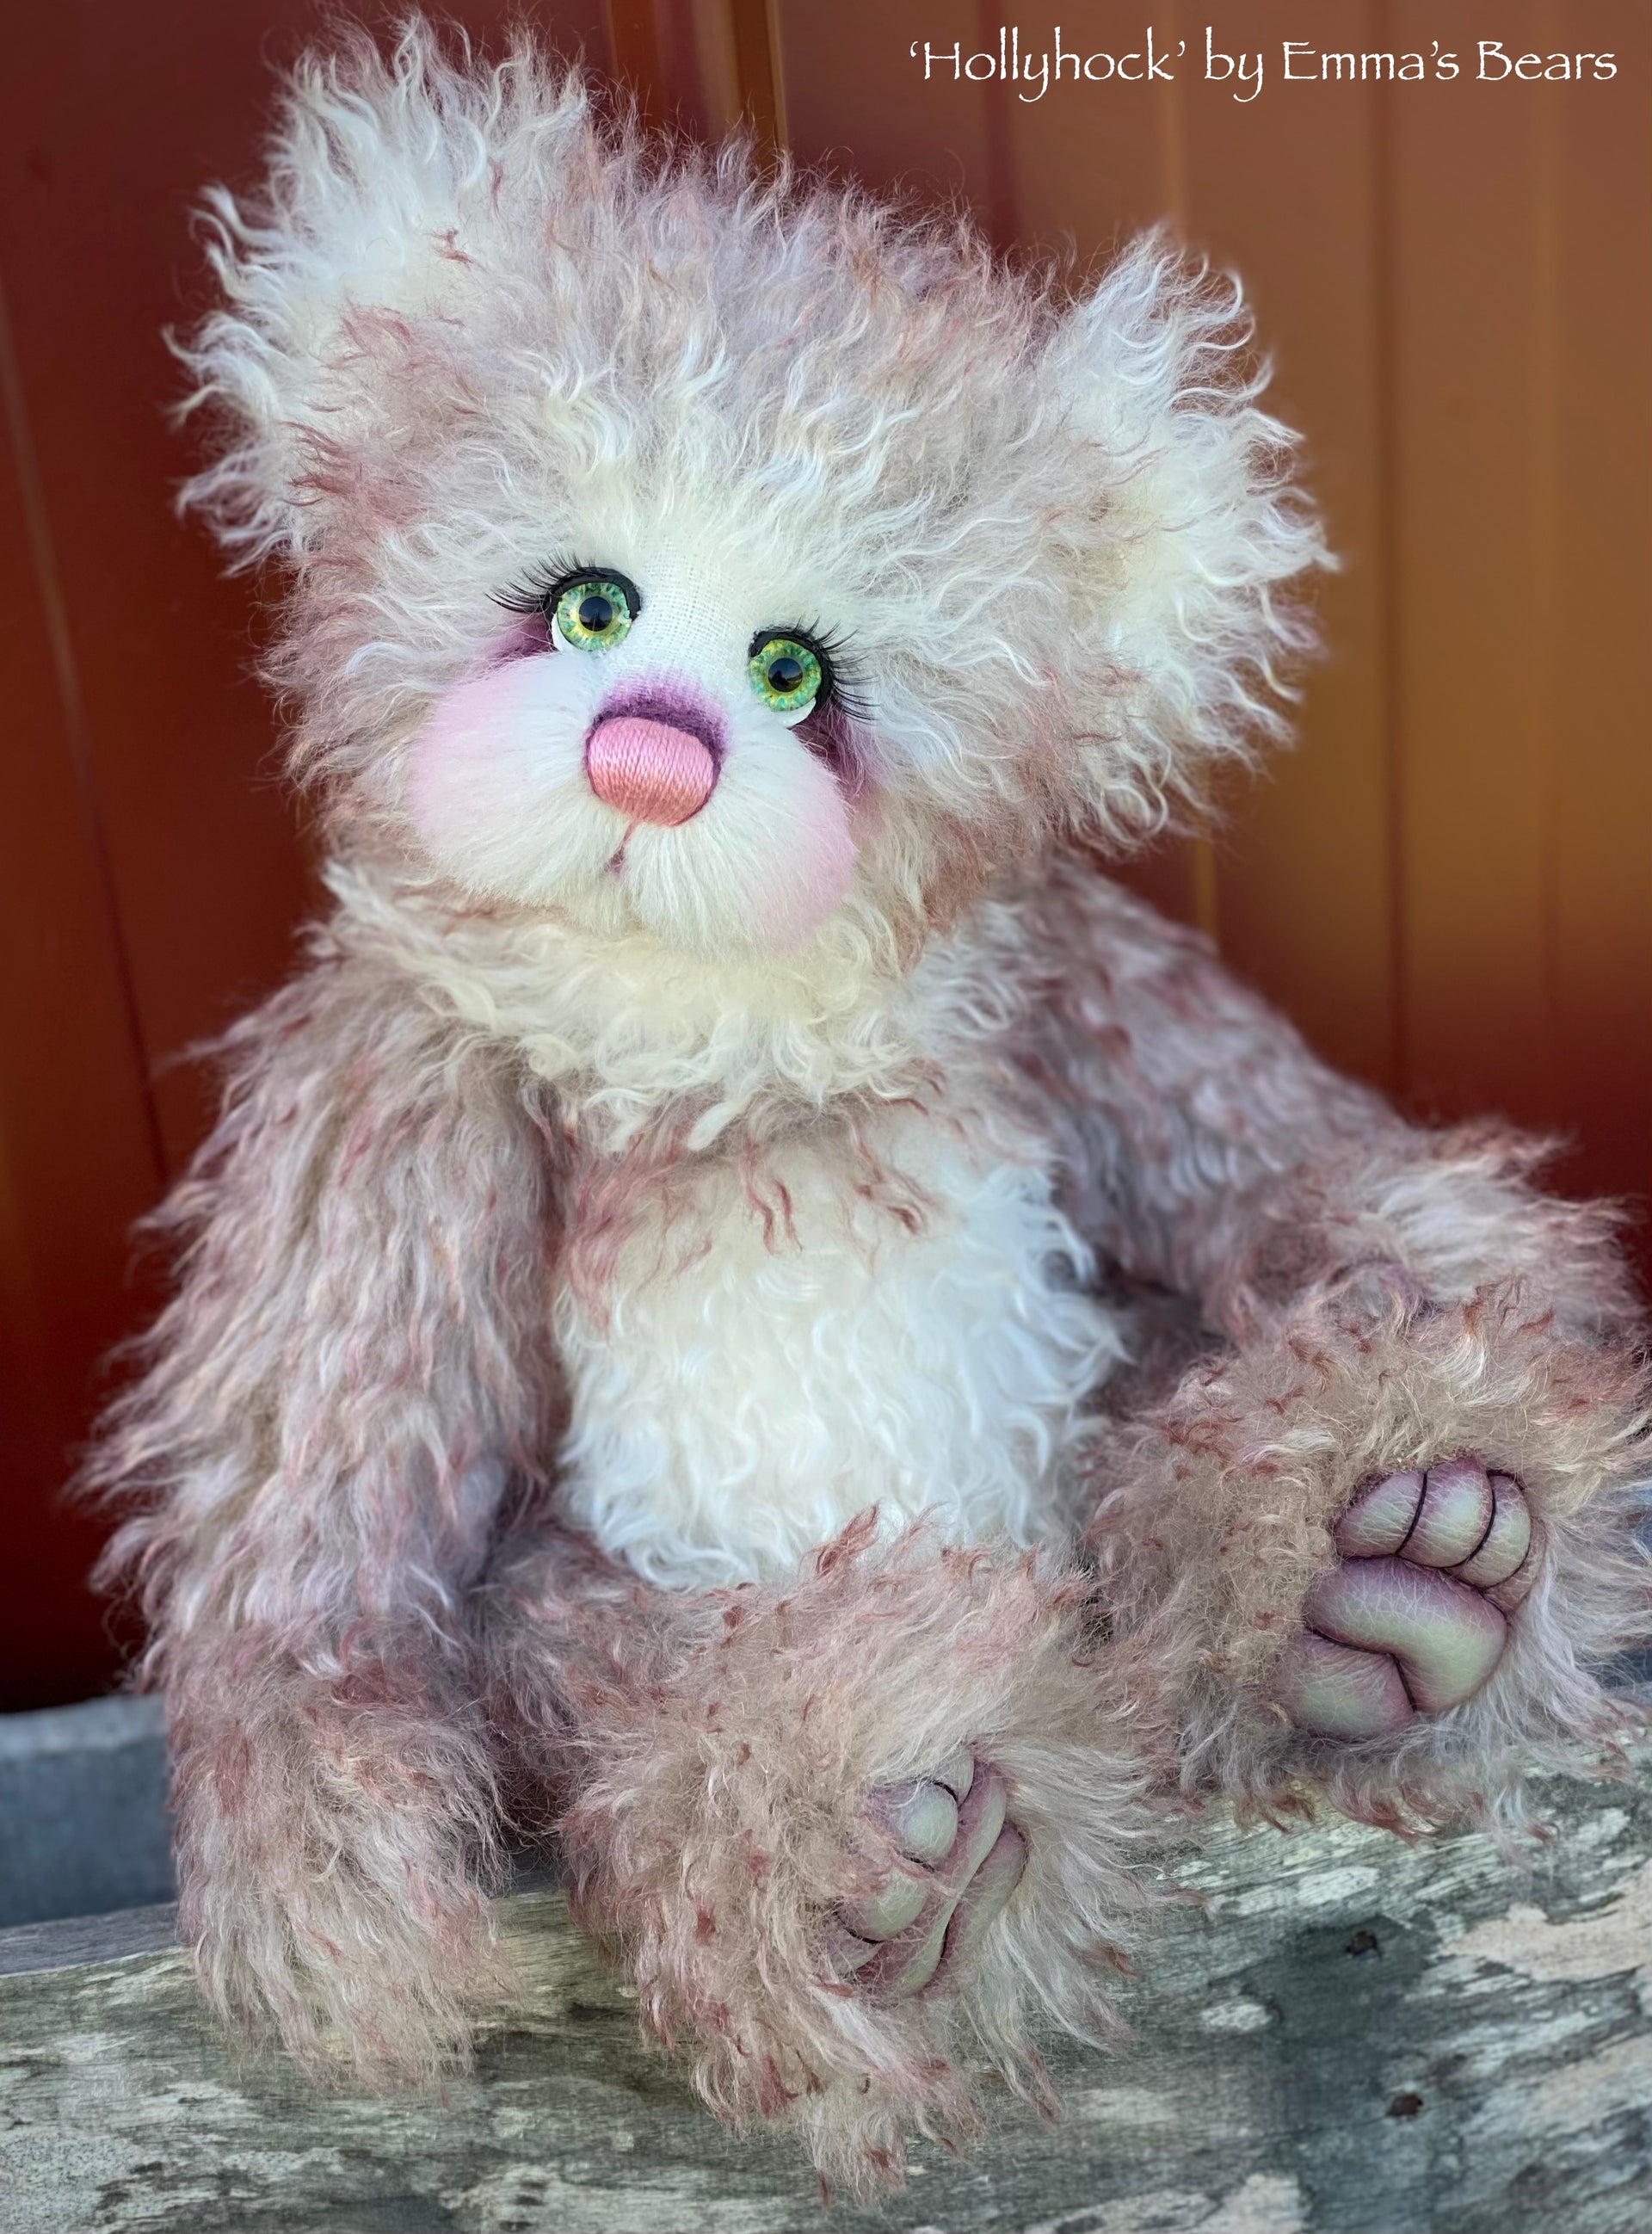 Hollyhock - 16" Tipped Curlylocks and Alpaca artist bear by Emma's Bears - OOAK